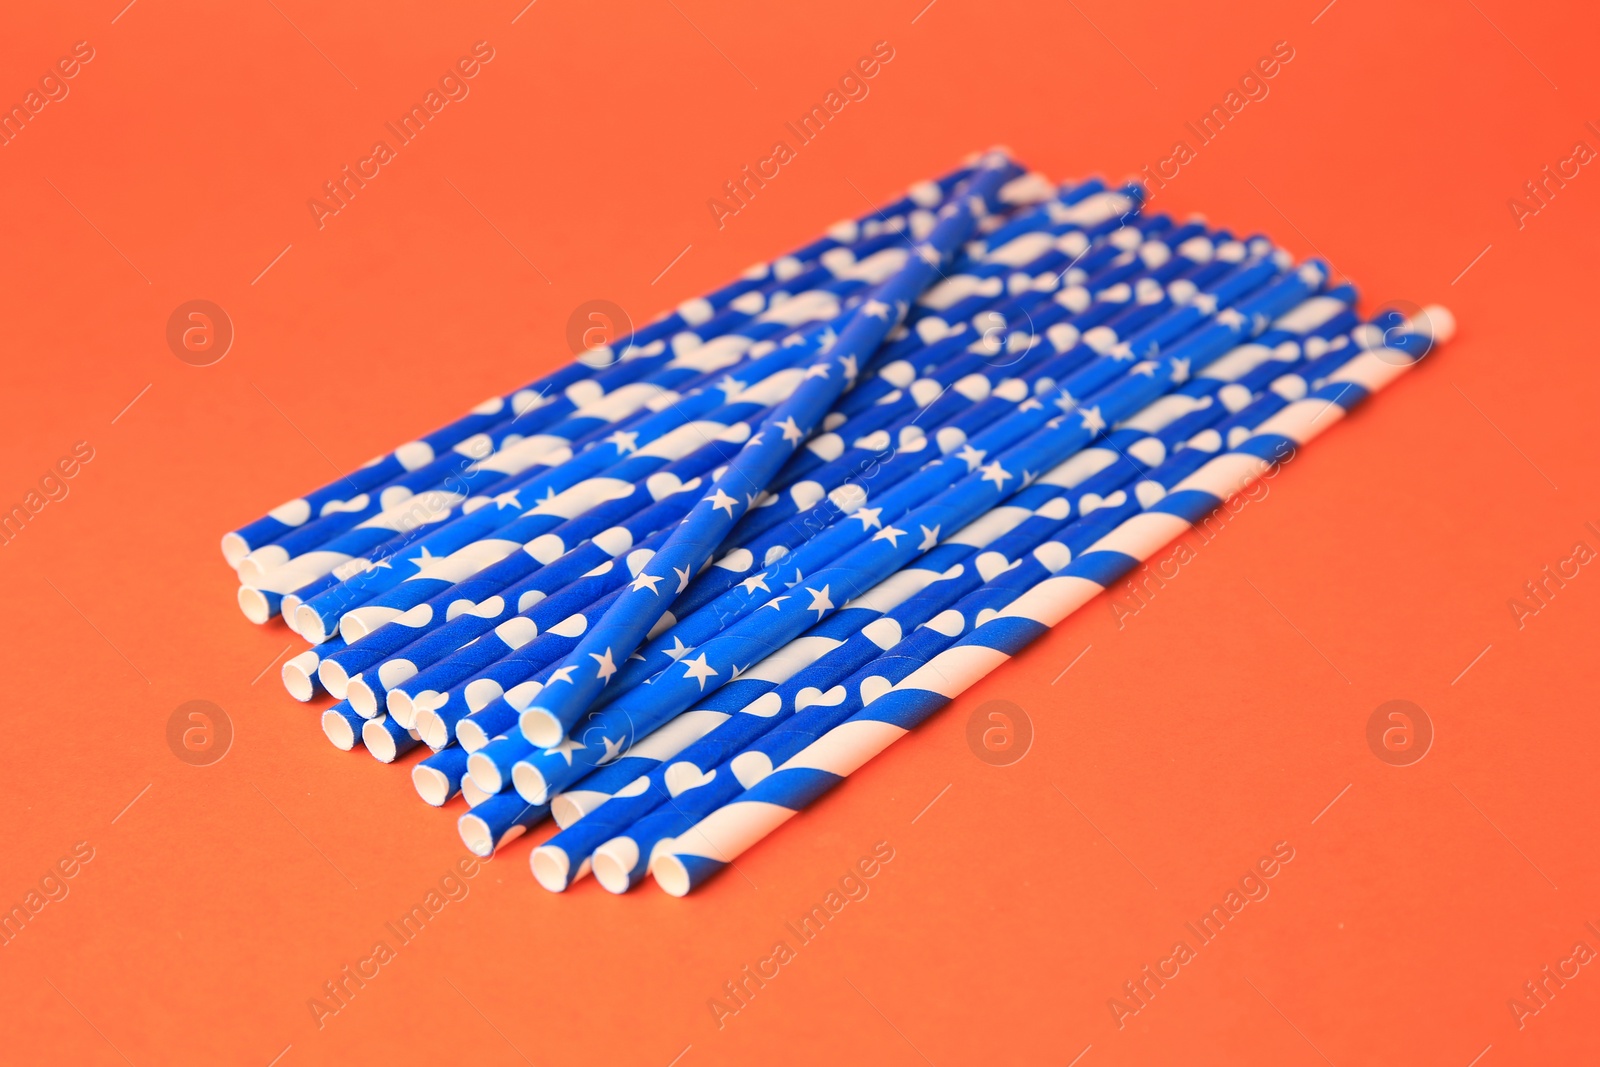 Photo of Many paper drinking straws on orange background